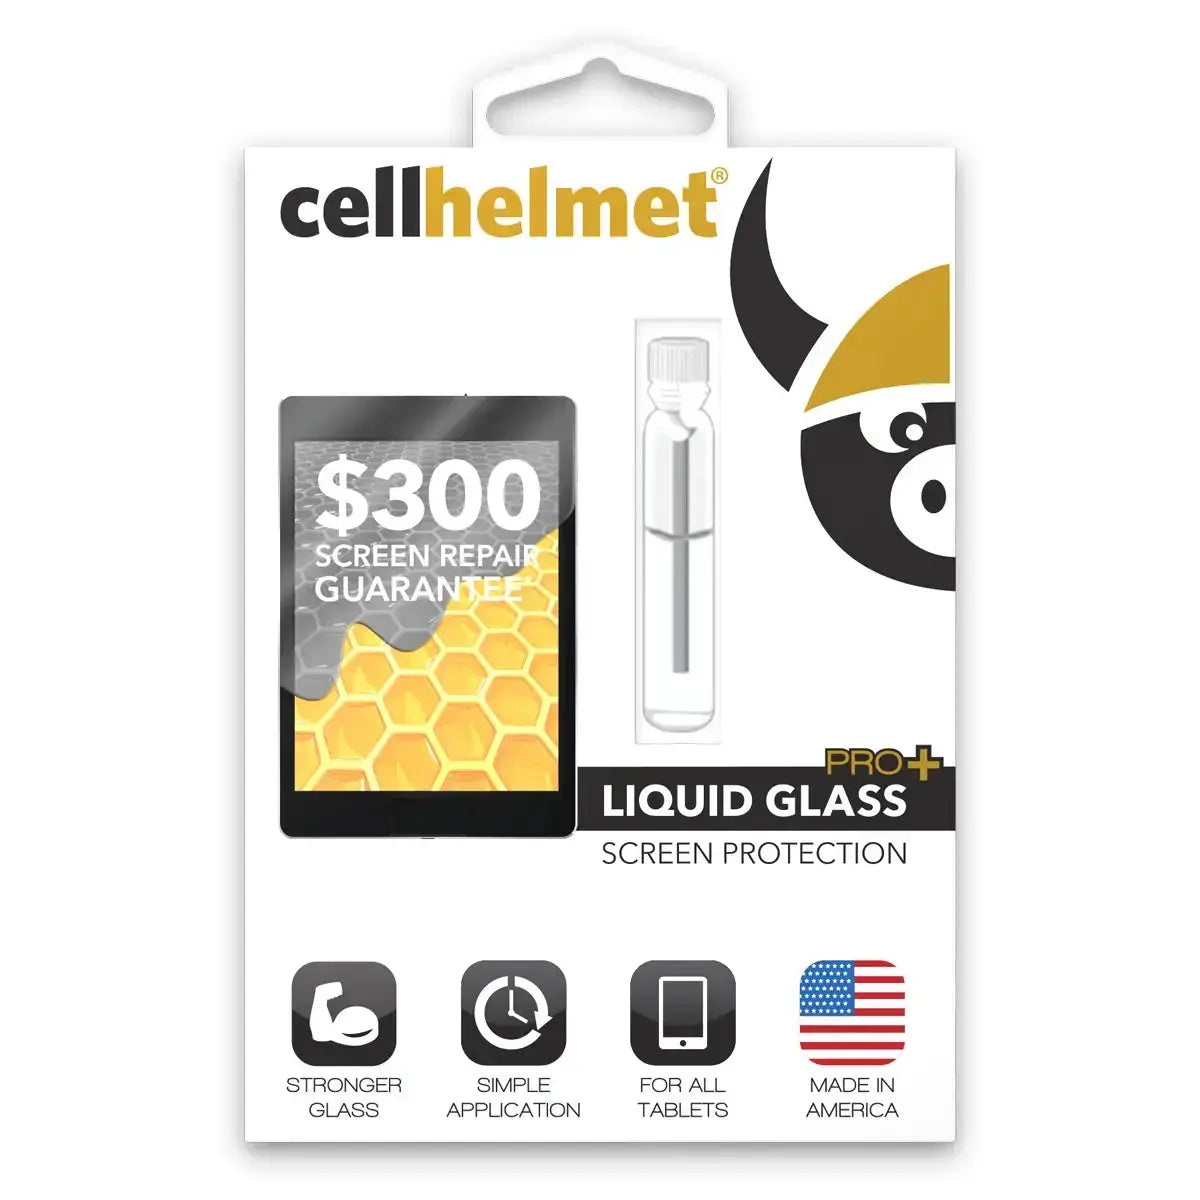 Tablet Liquid Glass Screen Protector with $300 Screen Repair Guarantee cellhelmet cellhelmet